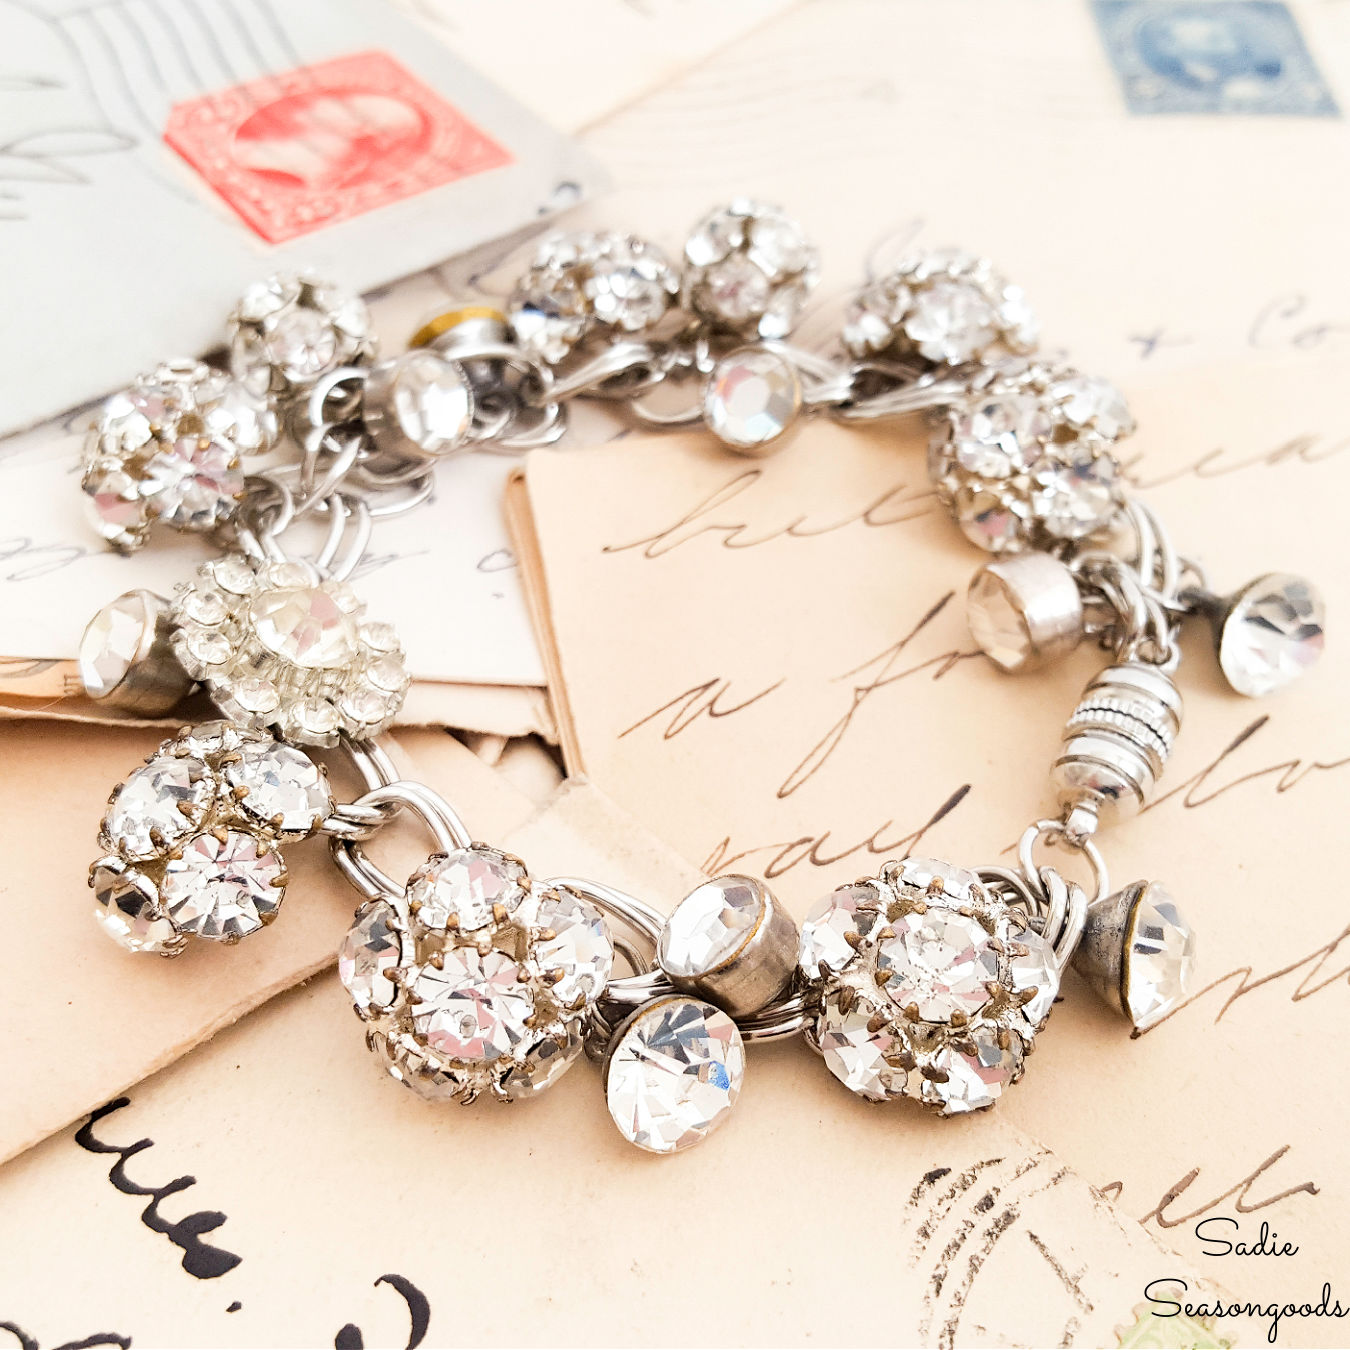 Fabulously Easy Handmade Jewelry - String Bracelet Tutorial